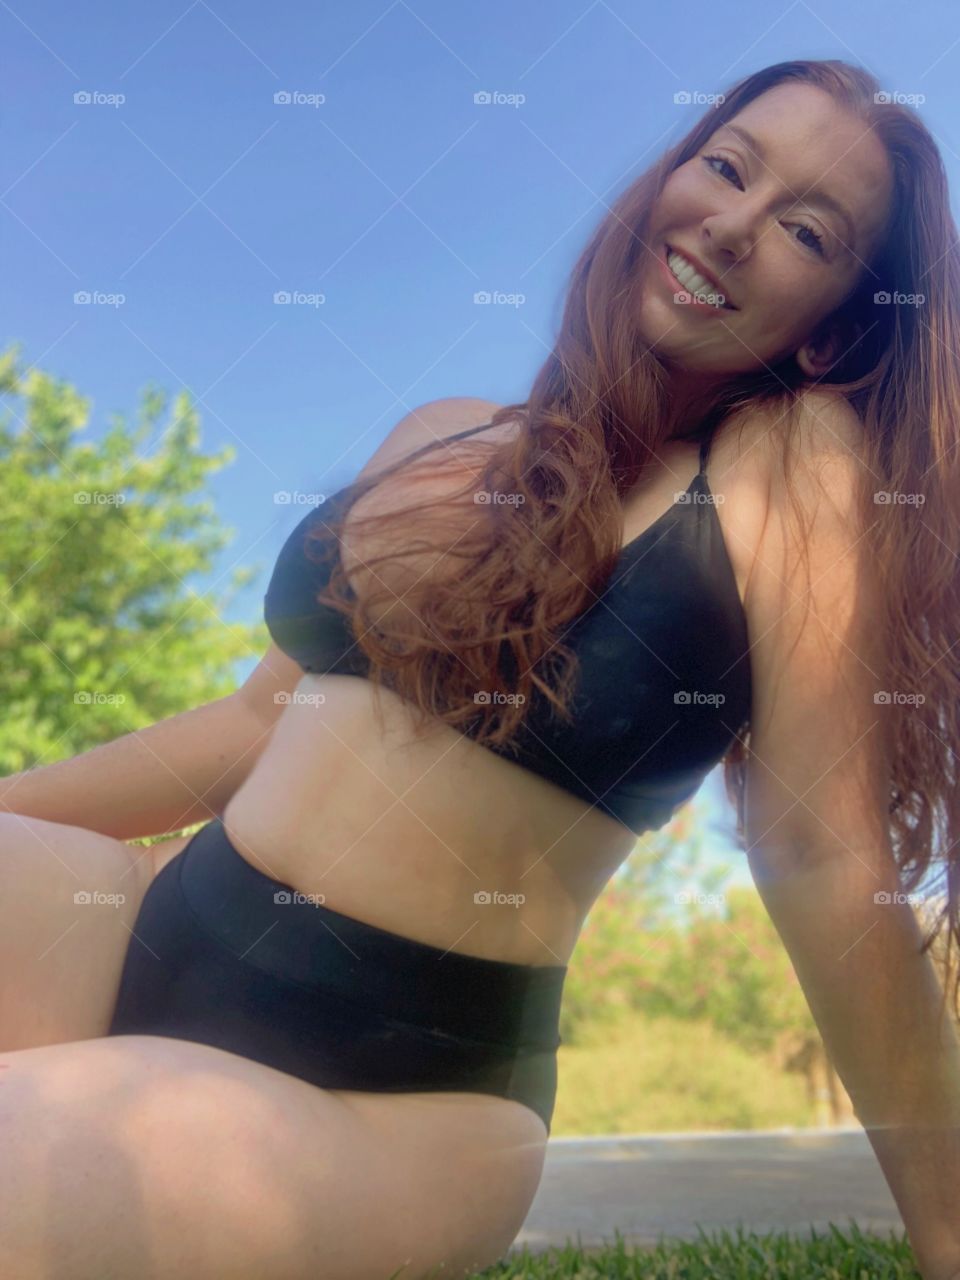 Cute photograph of a young redheaded model posing in a bikini